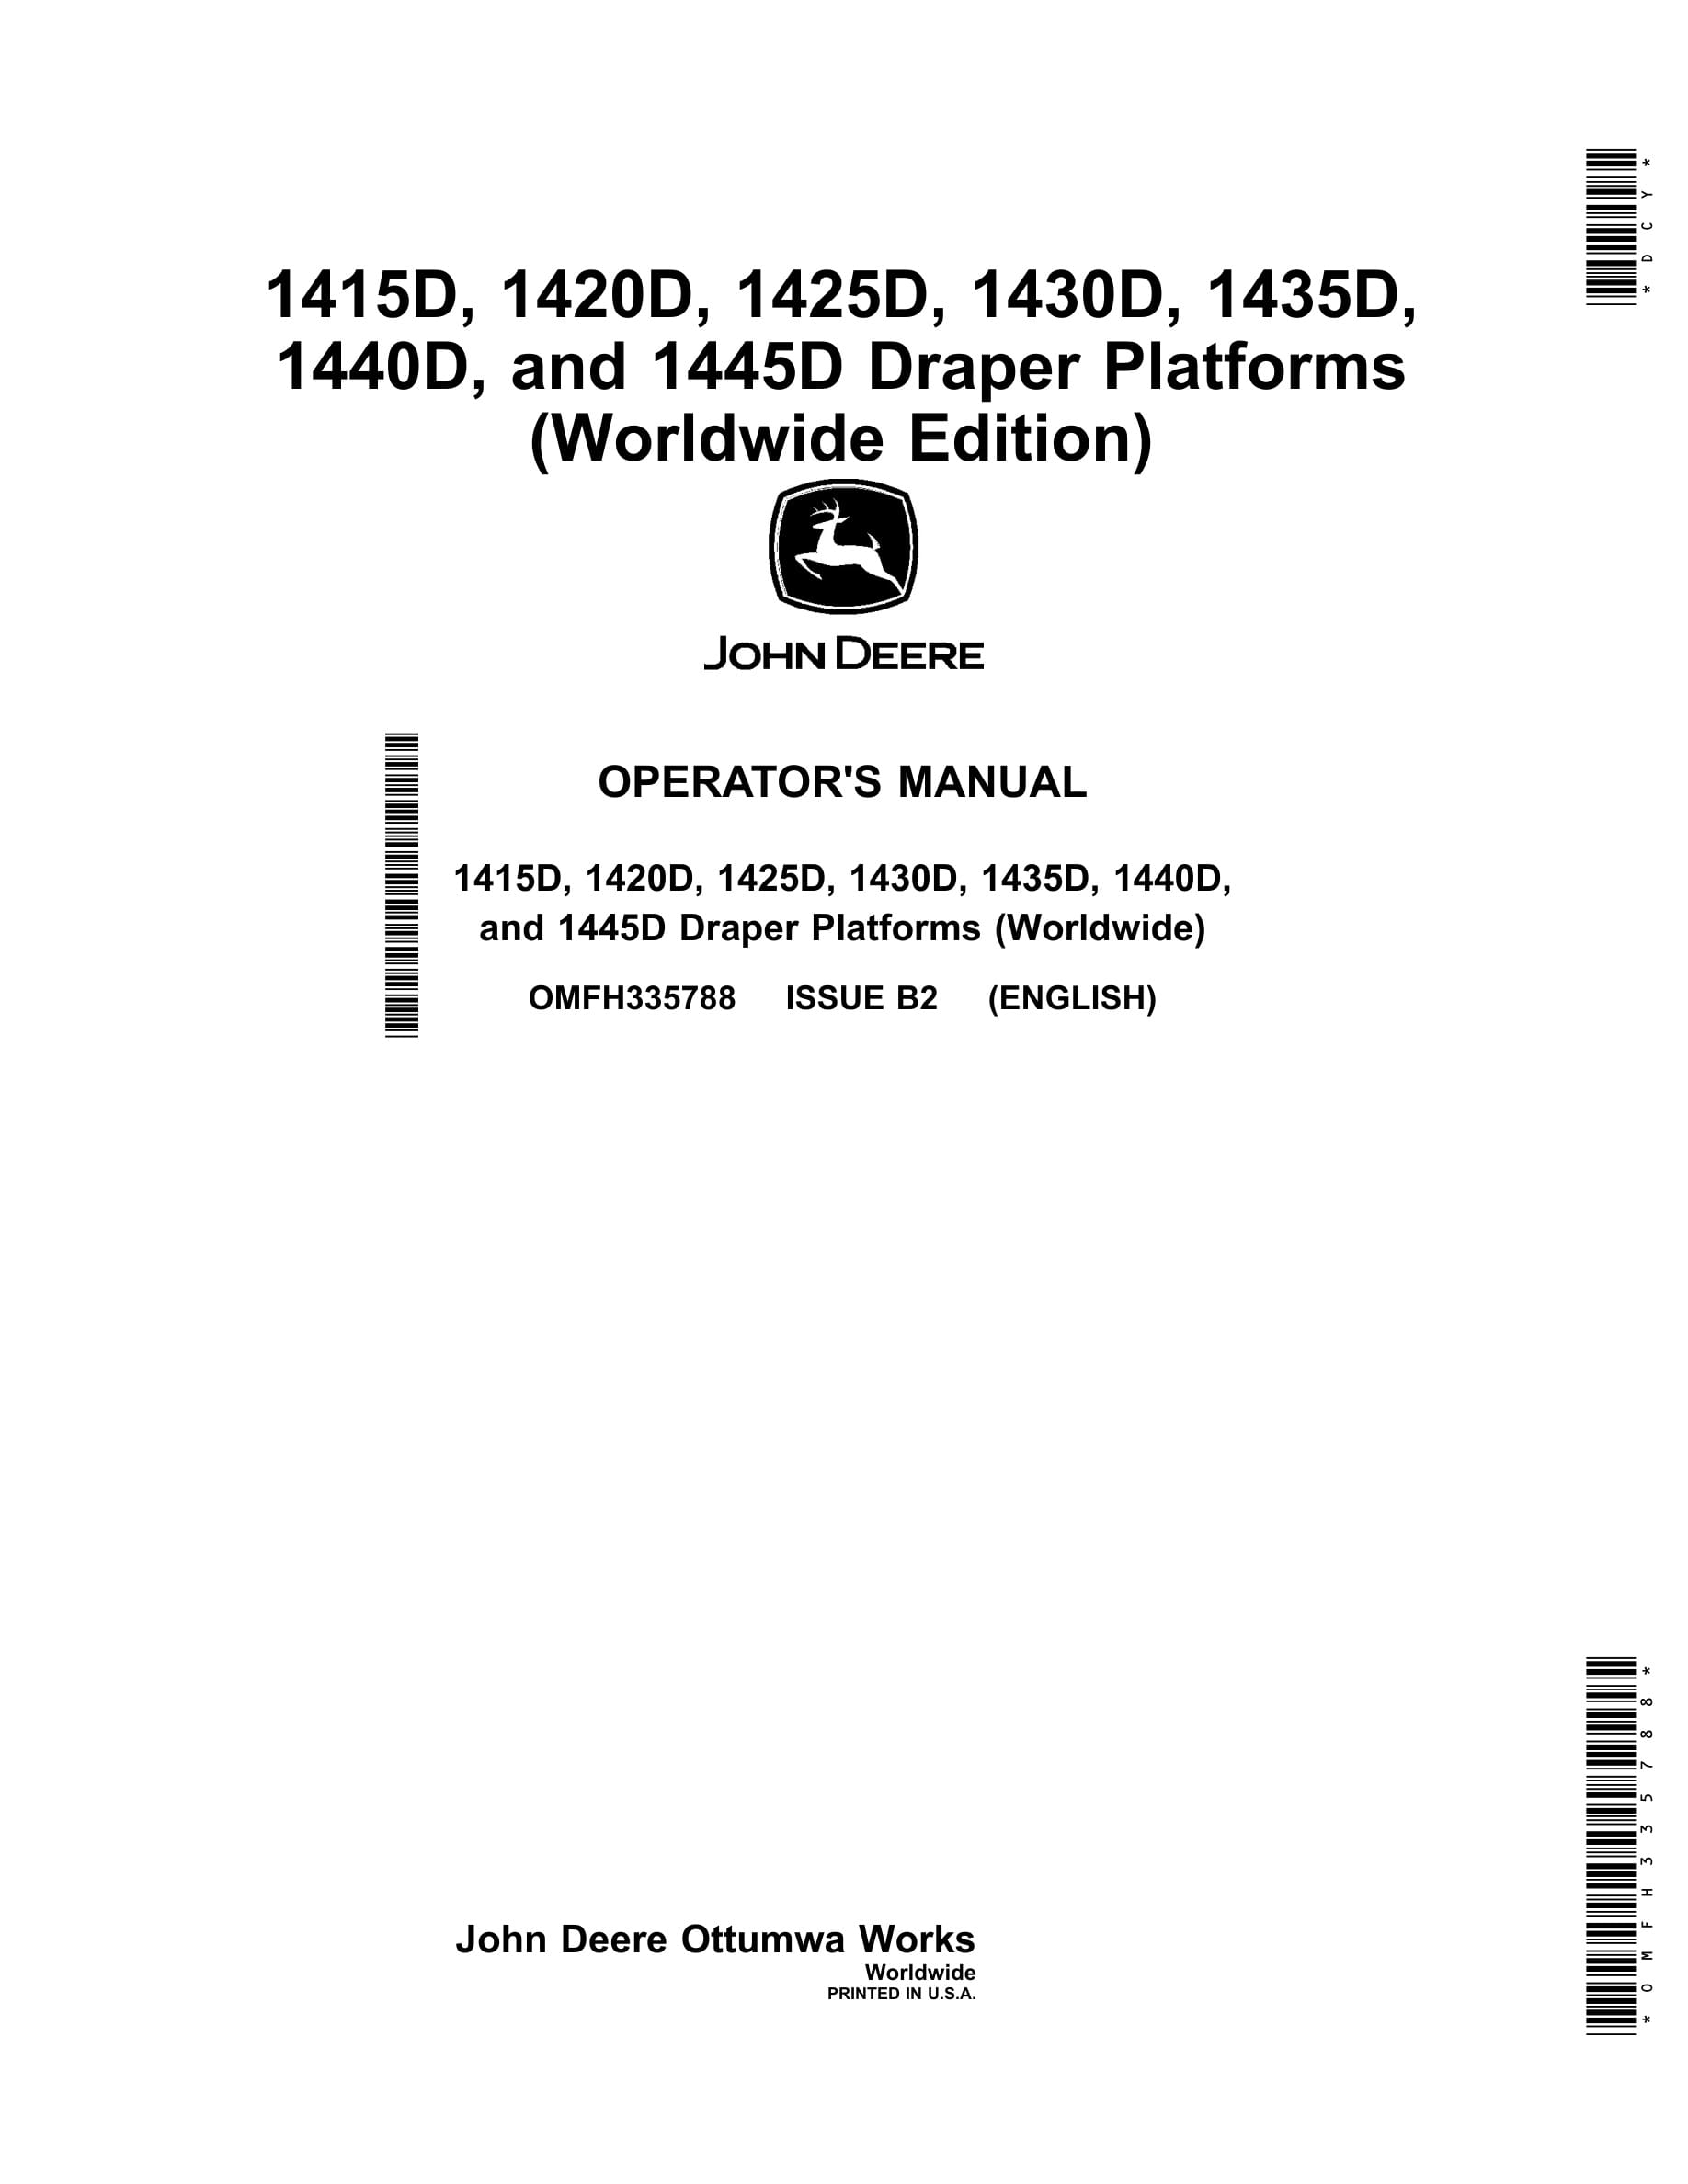 John Deere 1415D, 1420D, 1425D, 1430D, 1435D, 1440D, and 1445D Draper Platforms Operator Manual OMFH335788-1